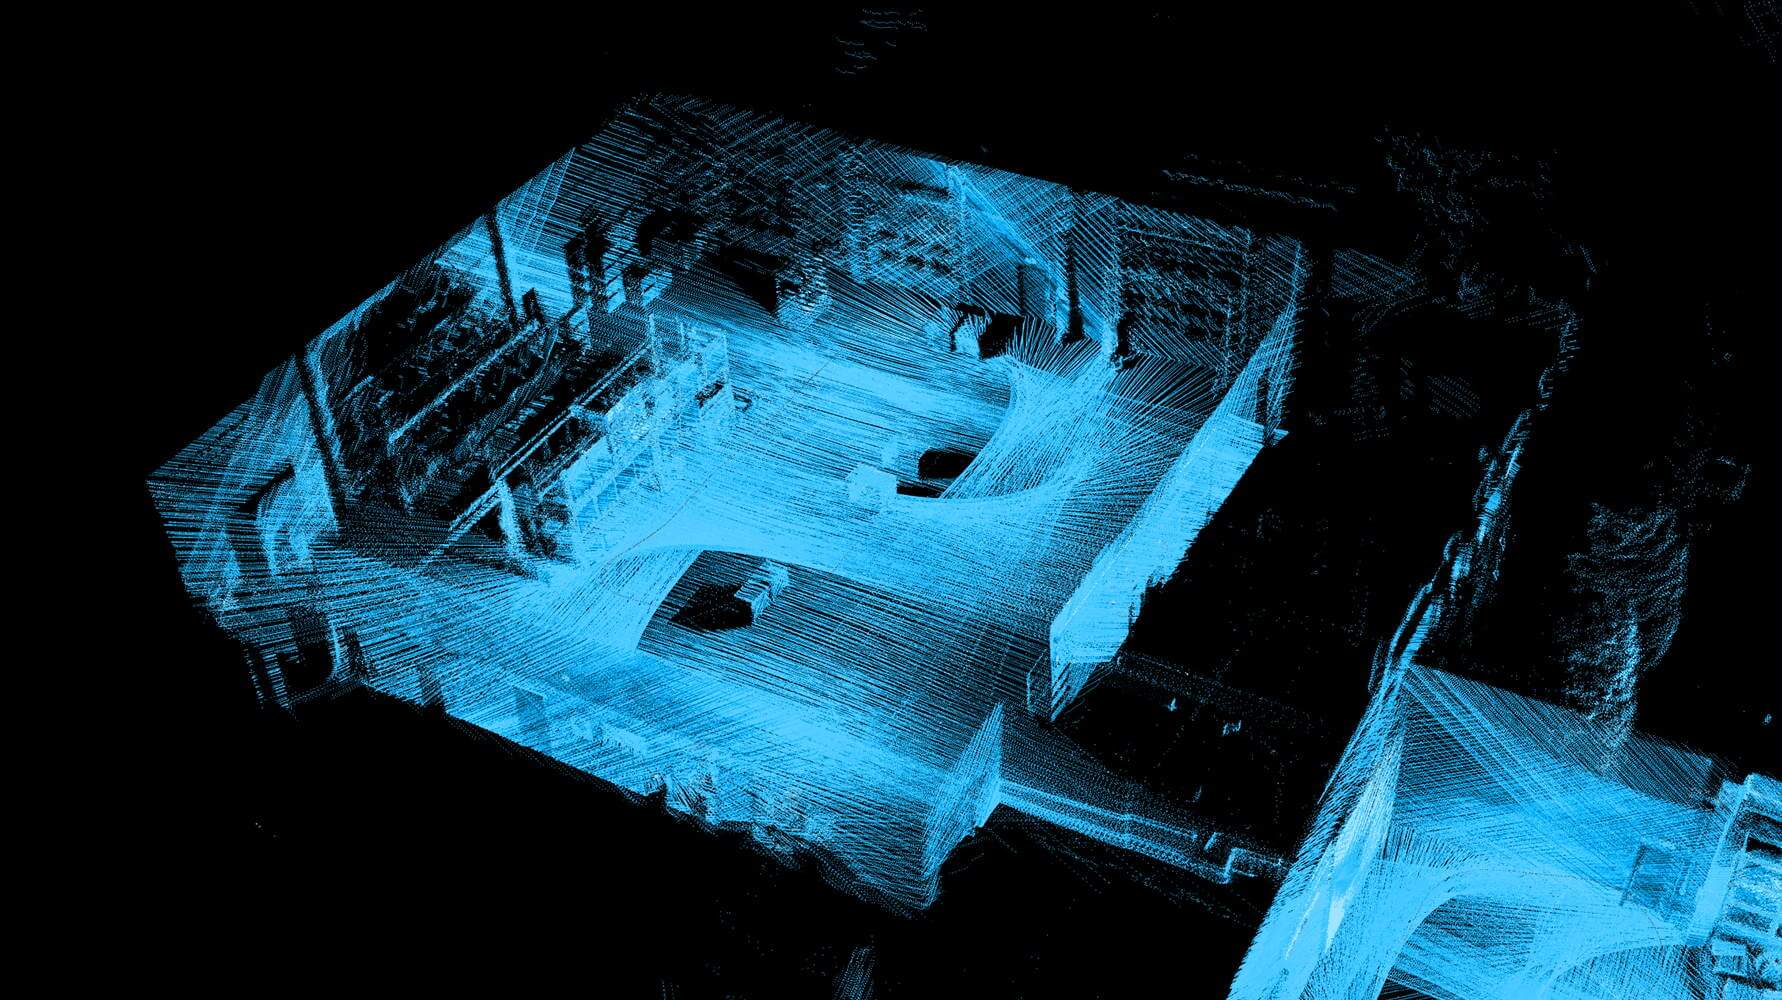 contour-based image of a warehouse using LiDAR sensor